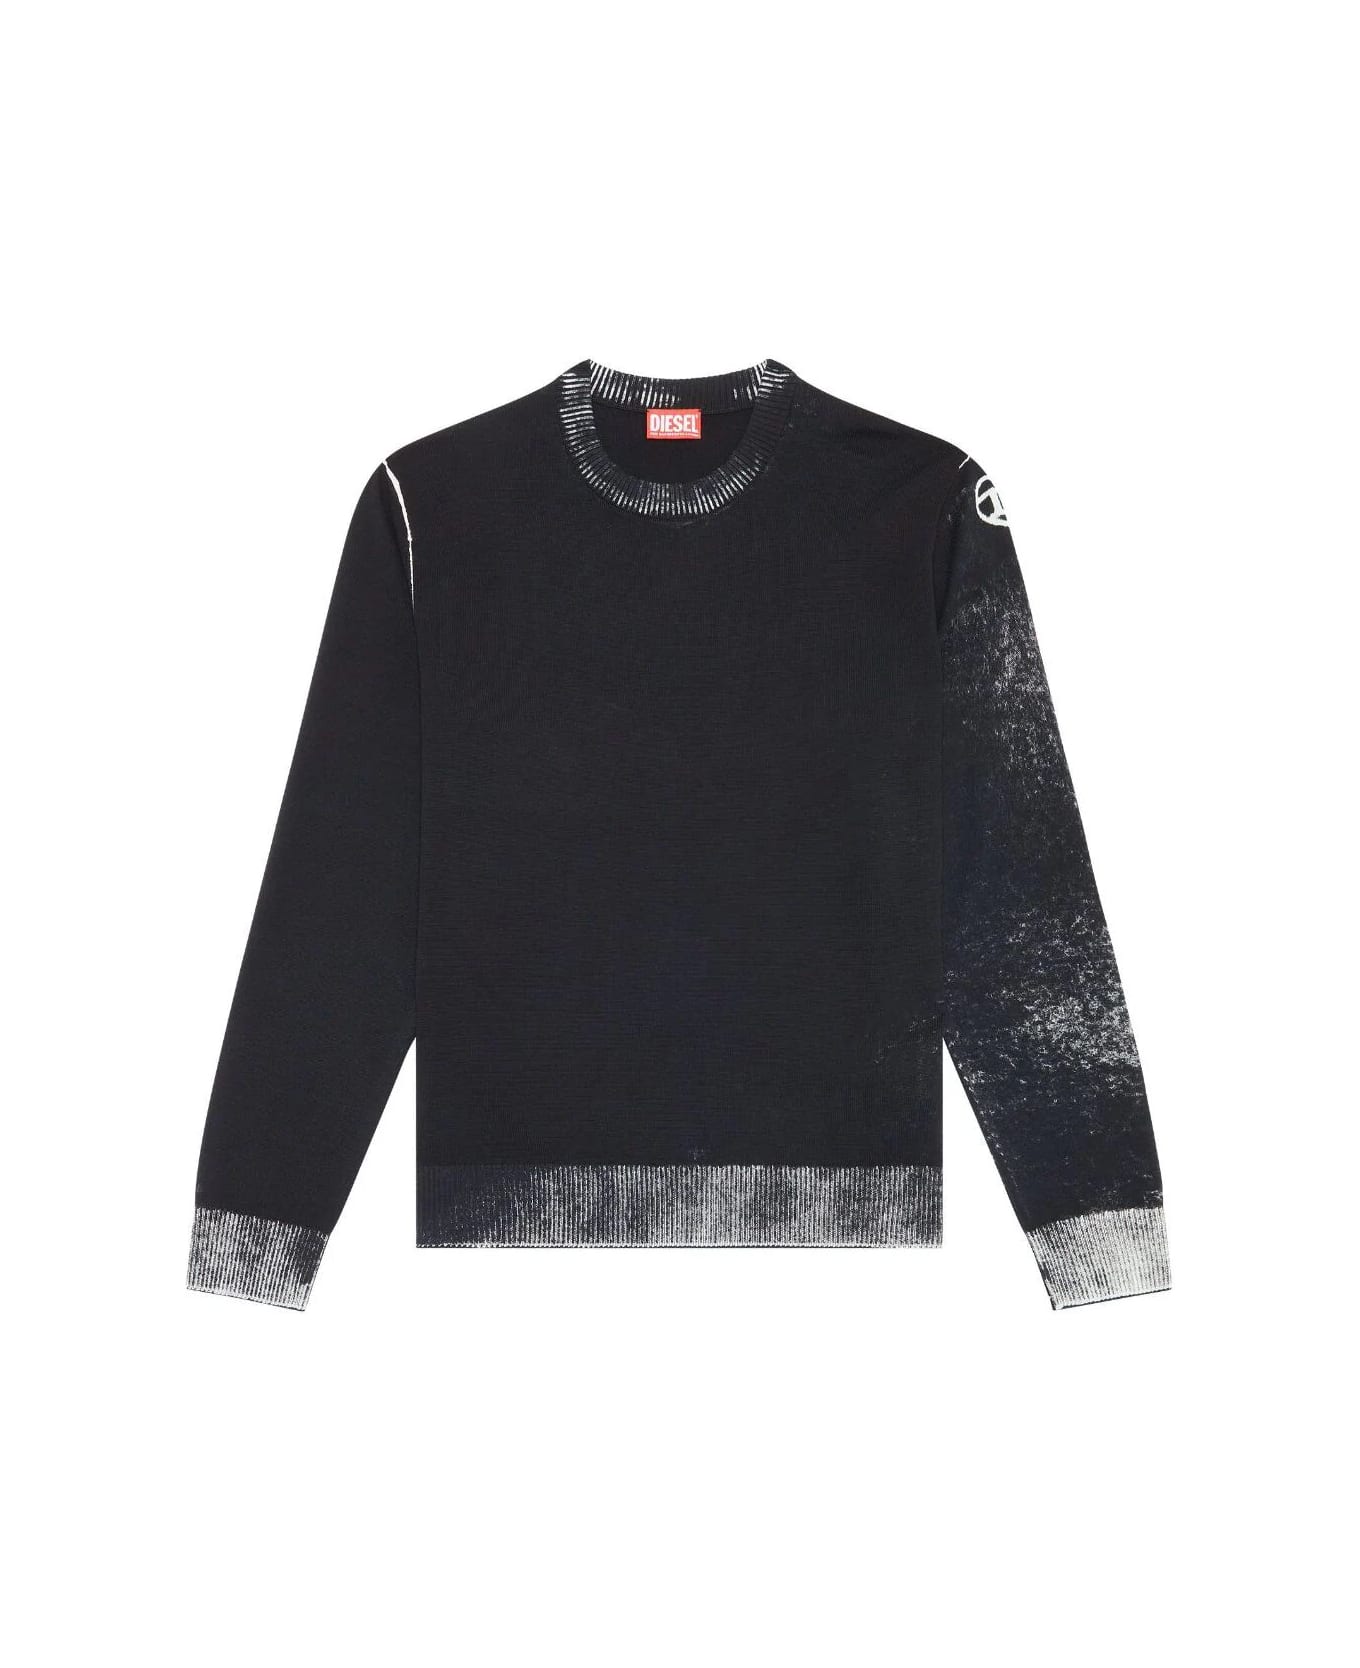 Diesel Larence Sweater - Xx Black